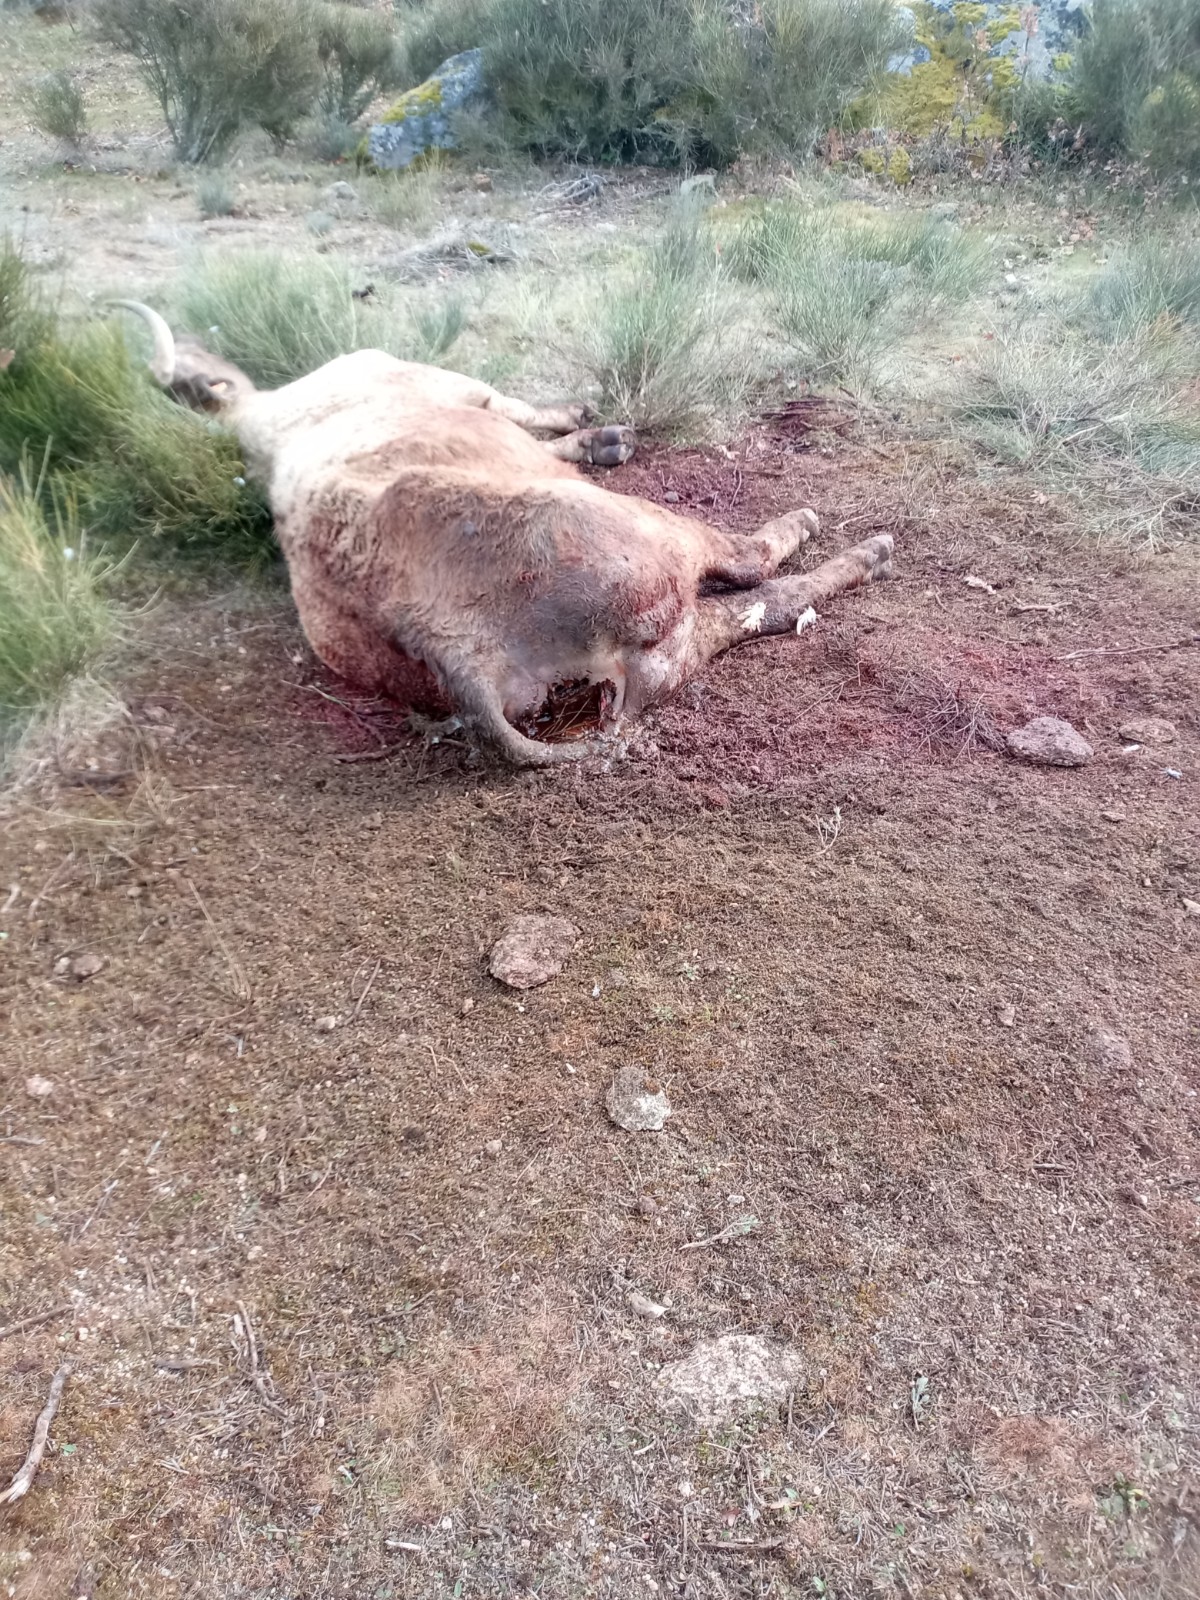 Vaca muerta en Cabeza de Framontana, Salamanca.